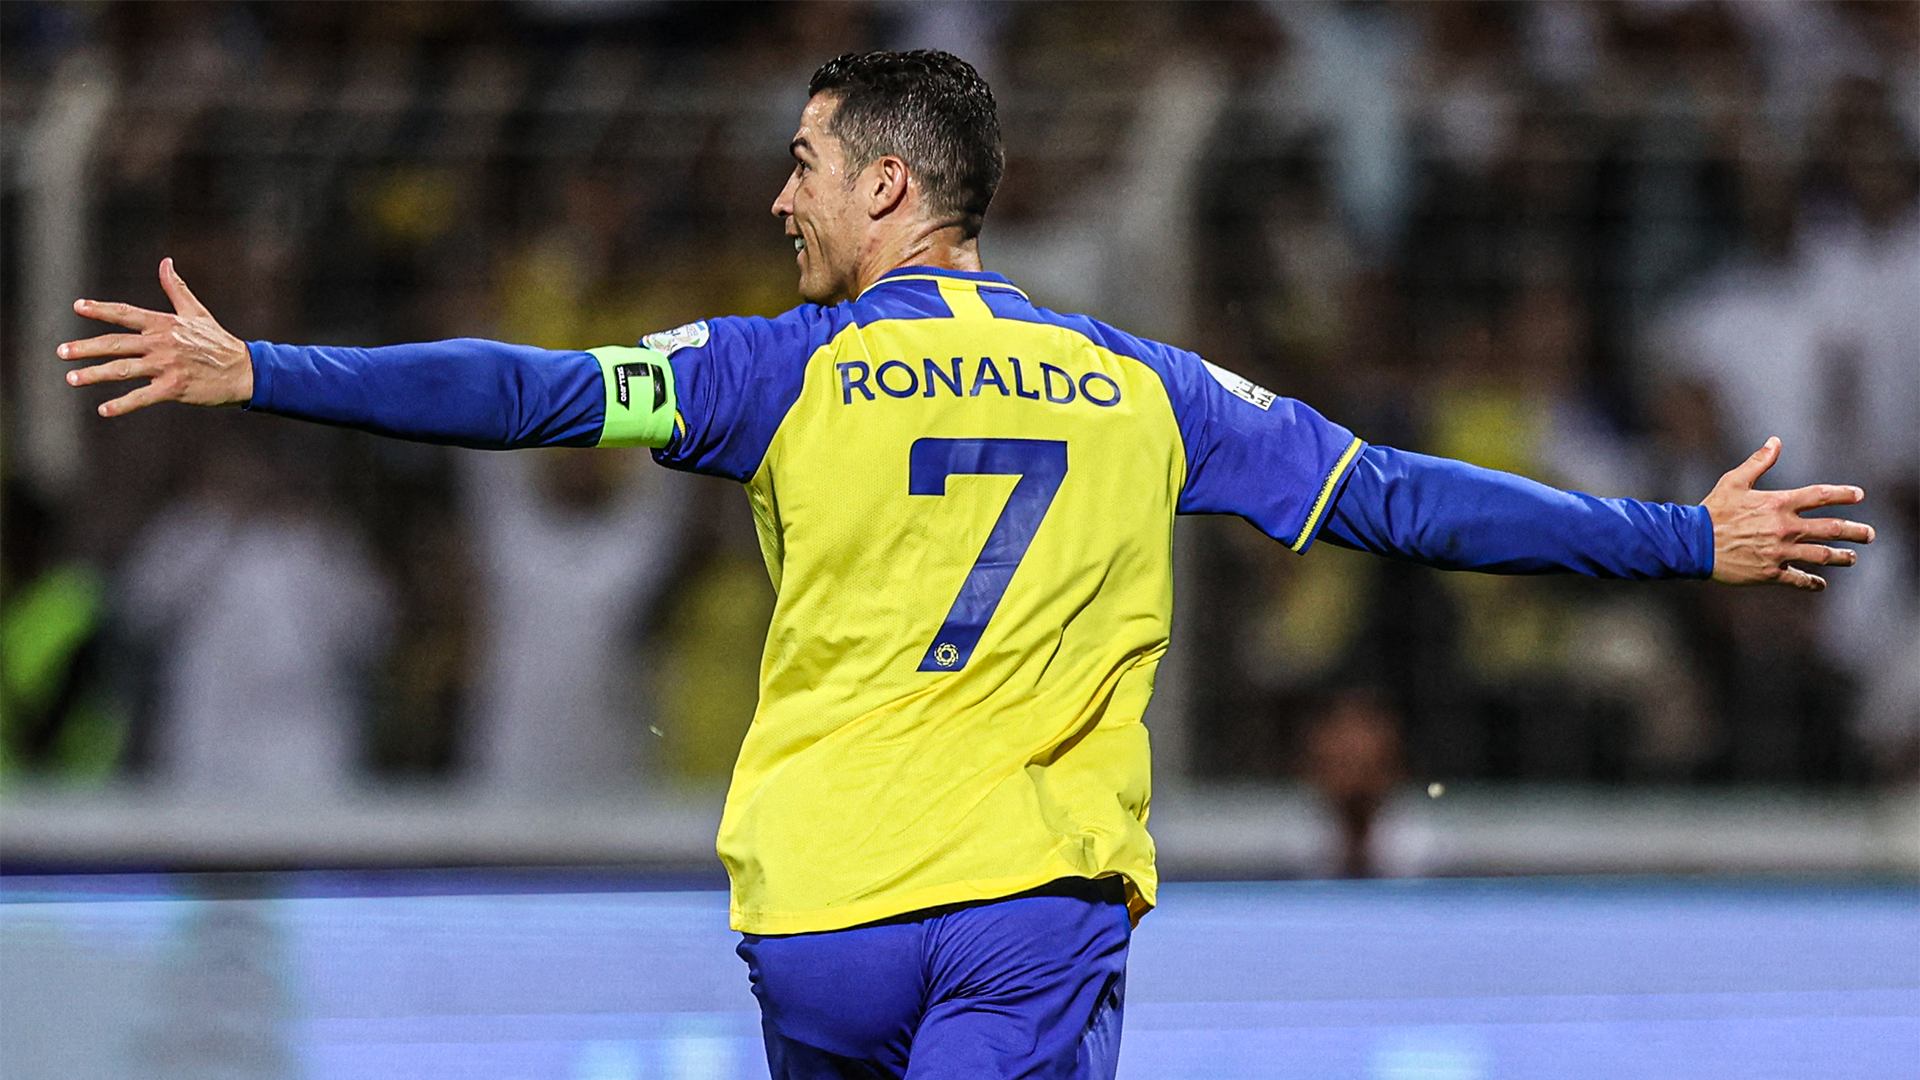 Four goals for Ronaldo against Al Wehda 